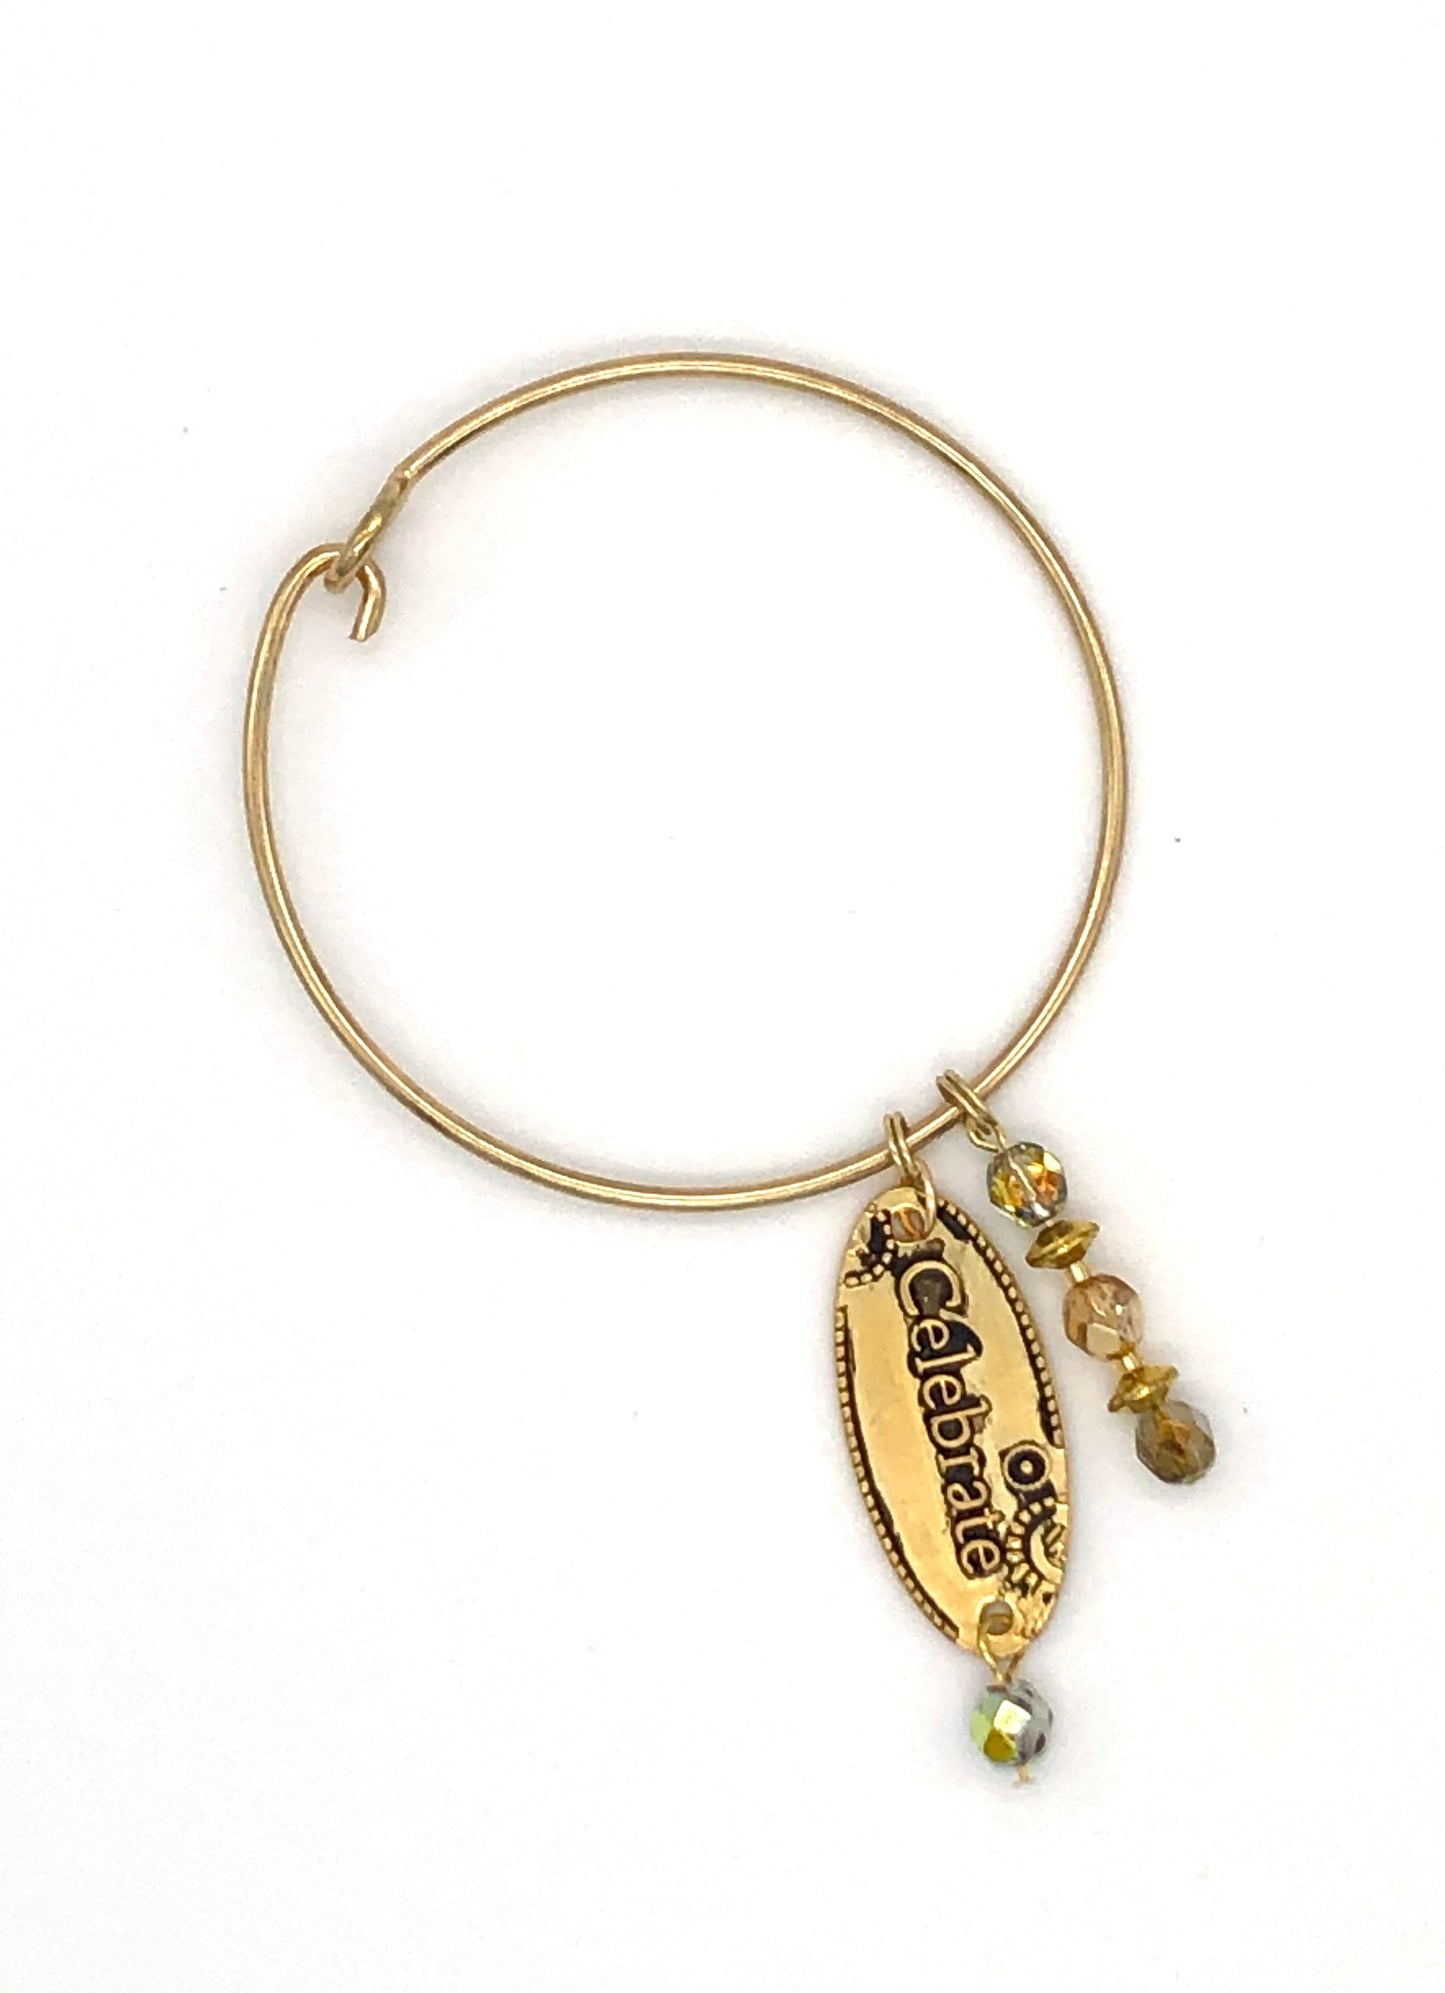 14k gold plated charm bangle bracelet